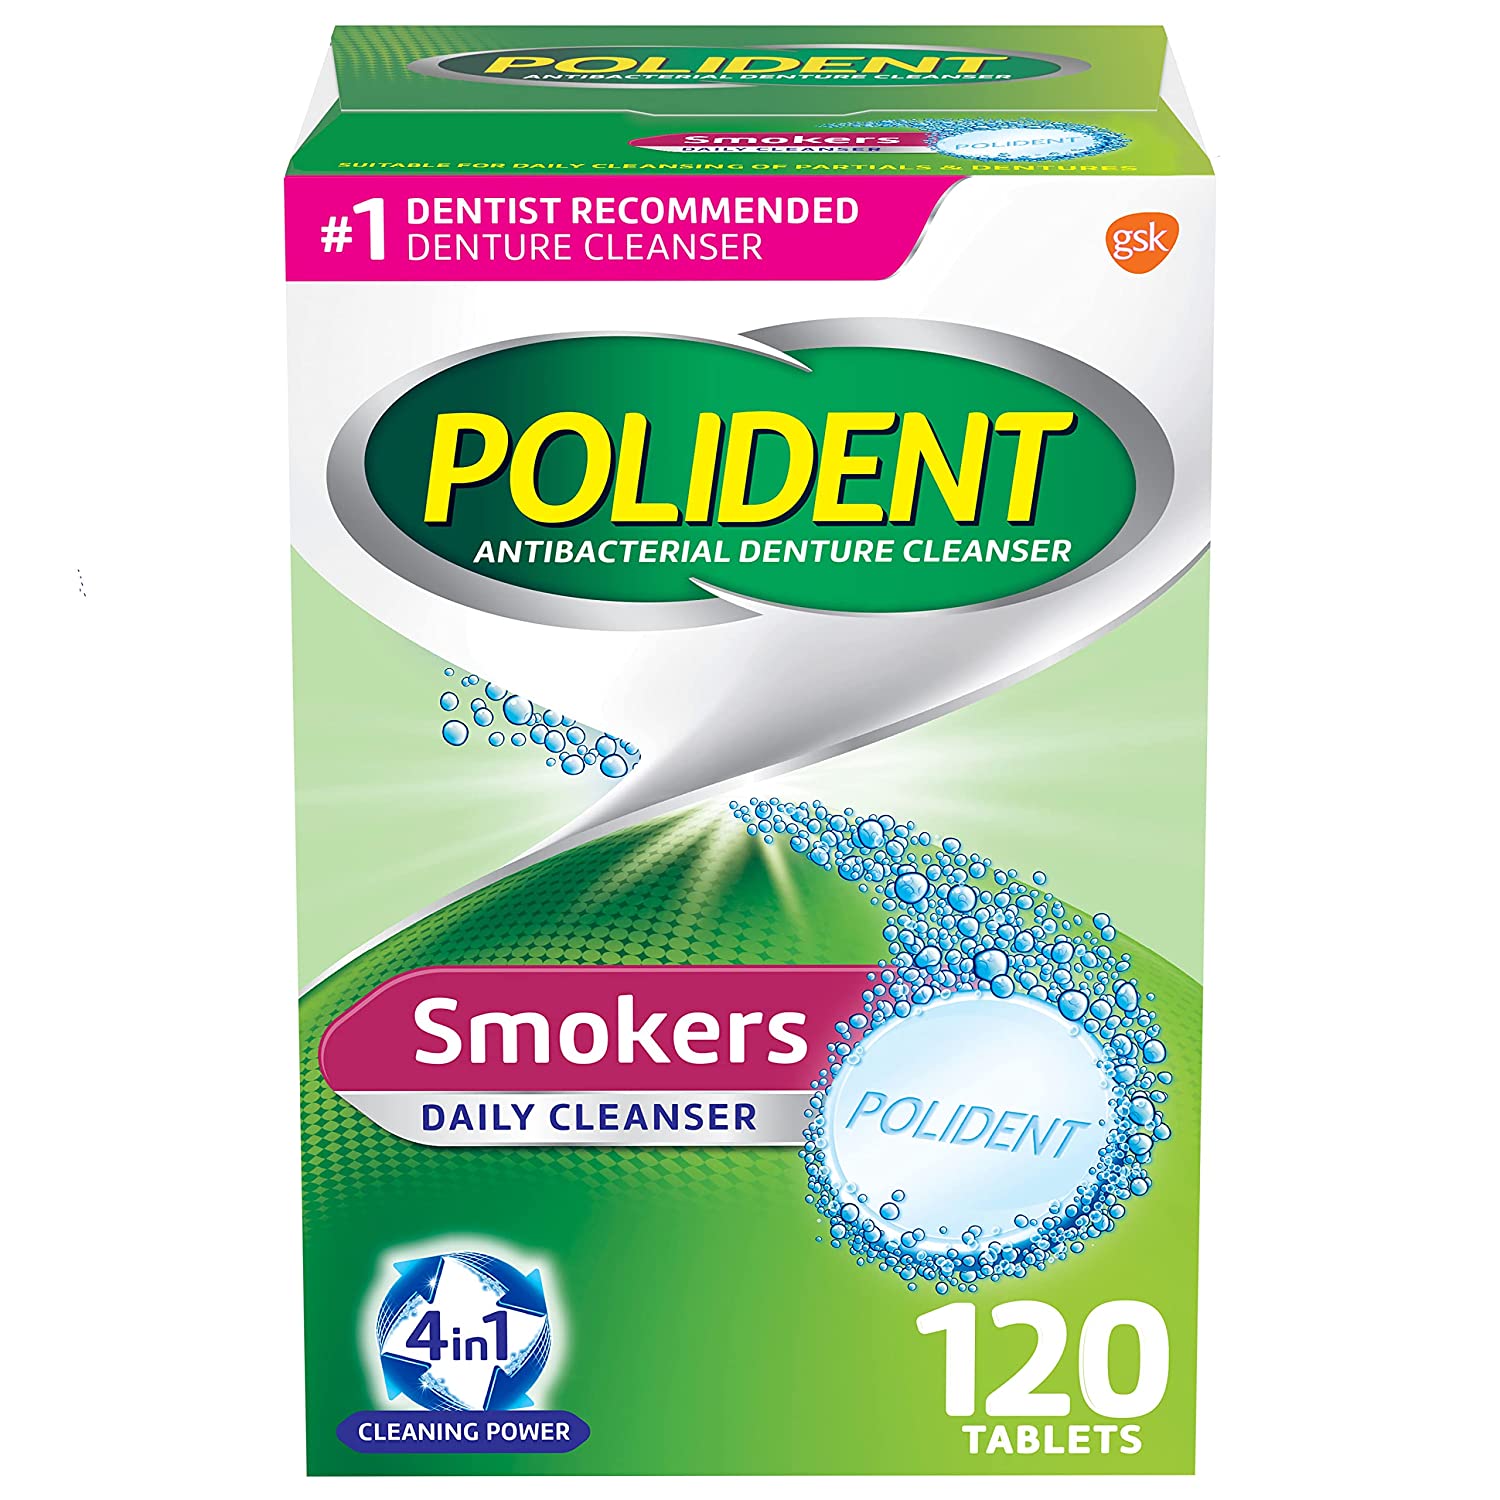 Polident Smokers Antibacterial Denture Cleanser [...]